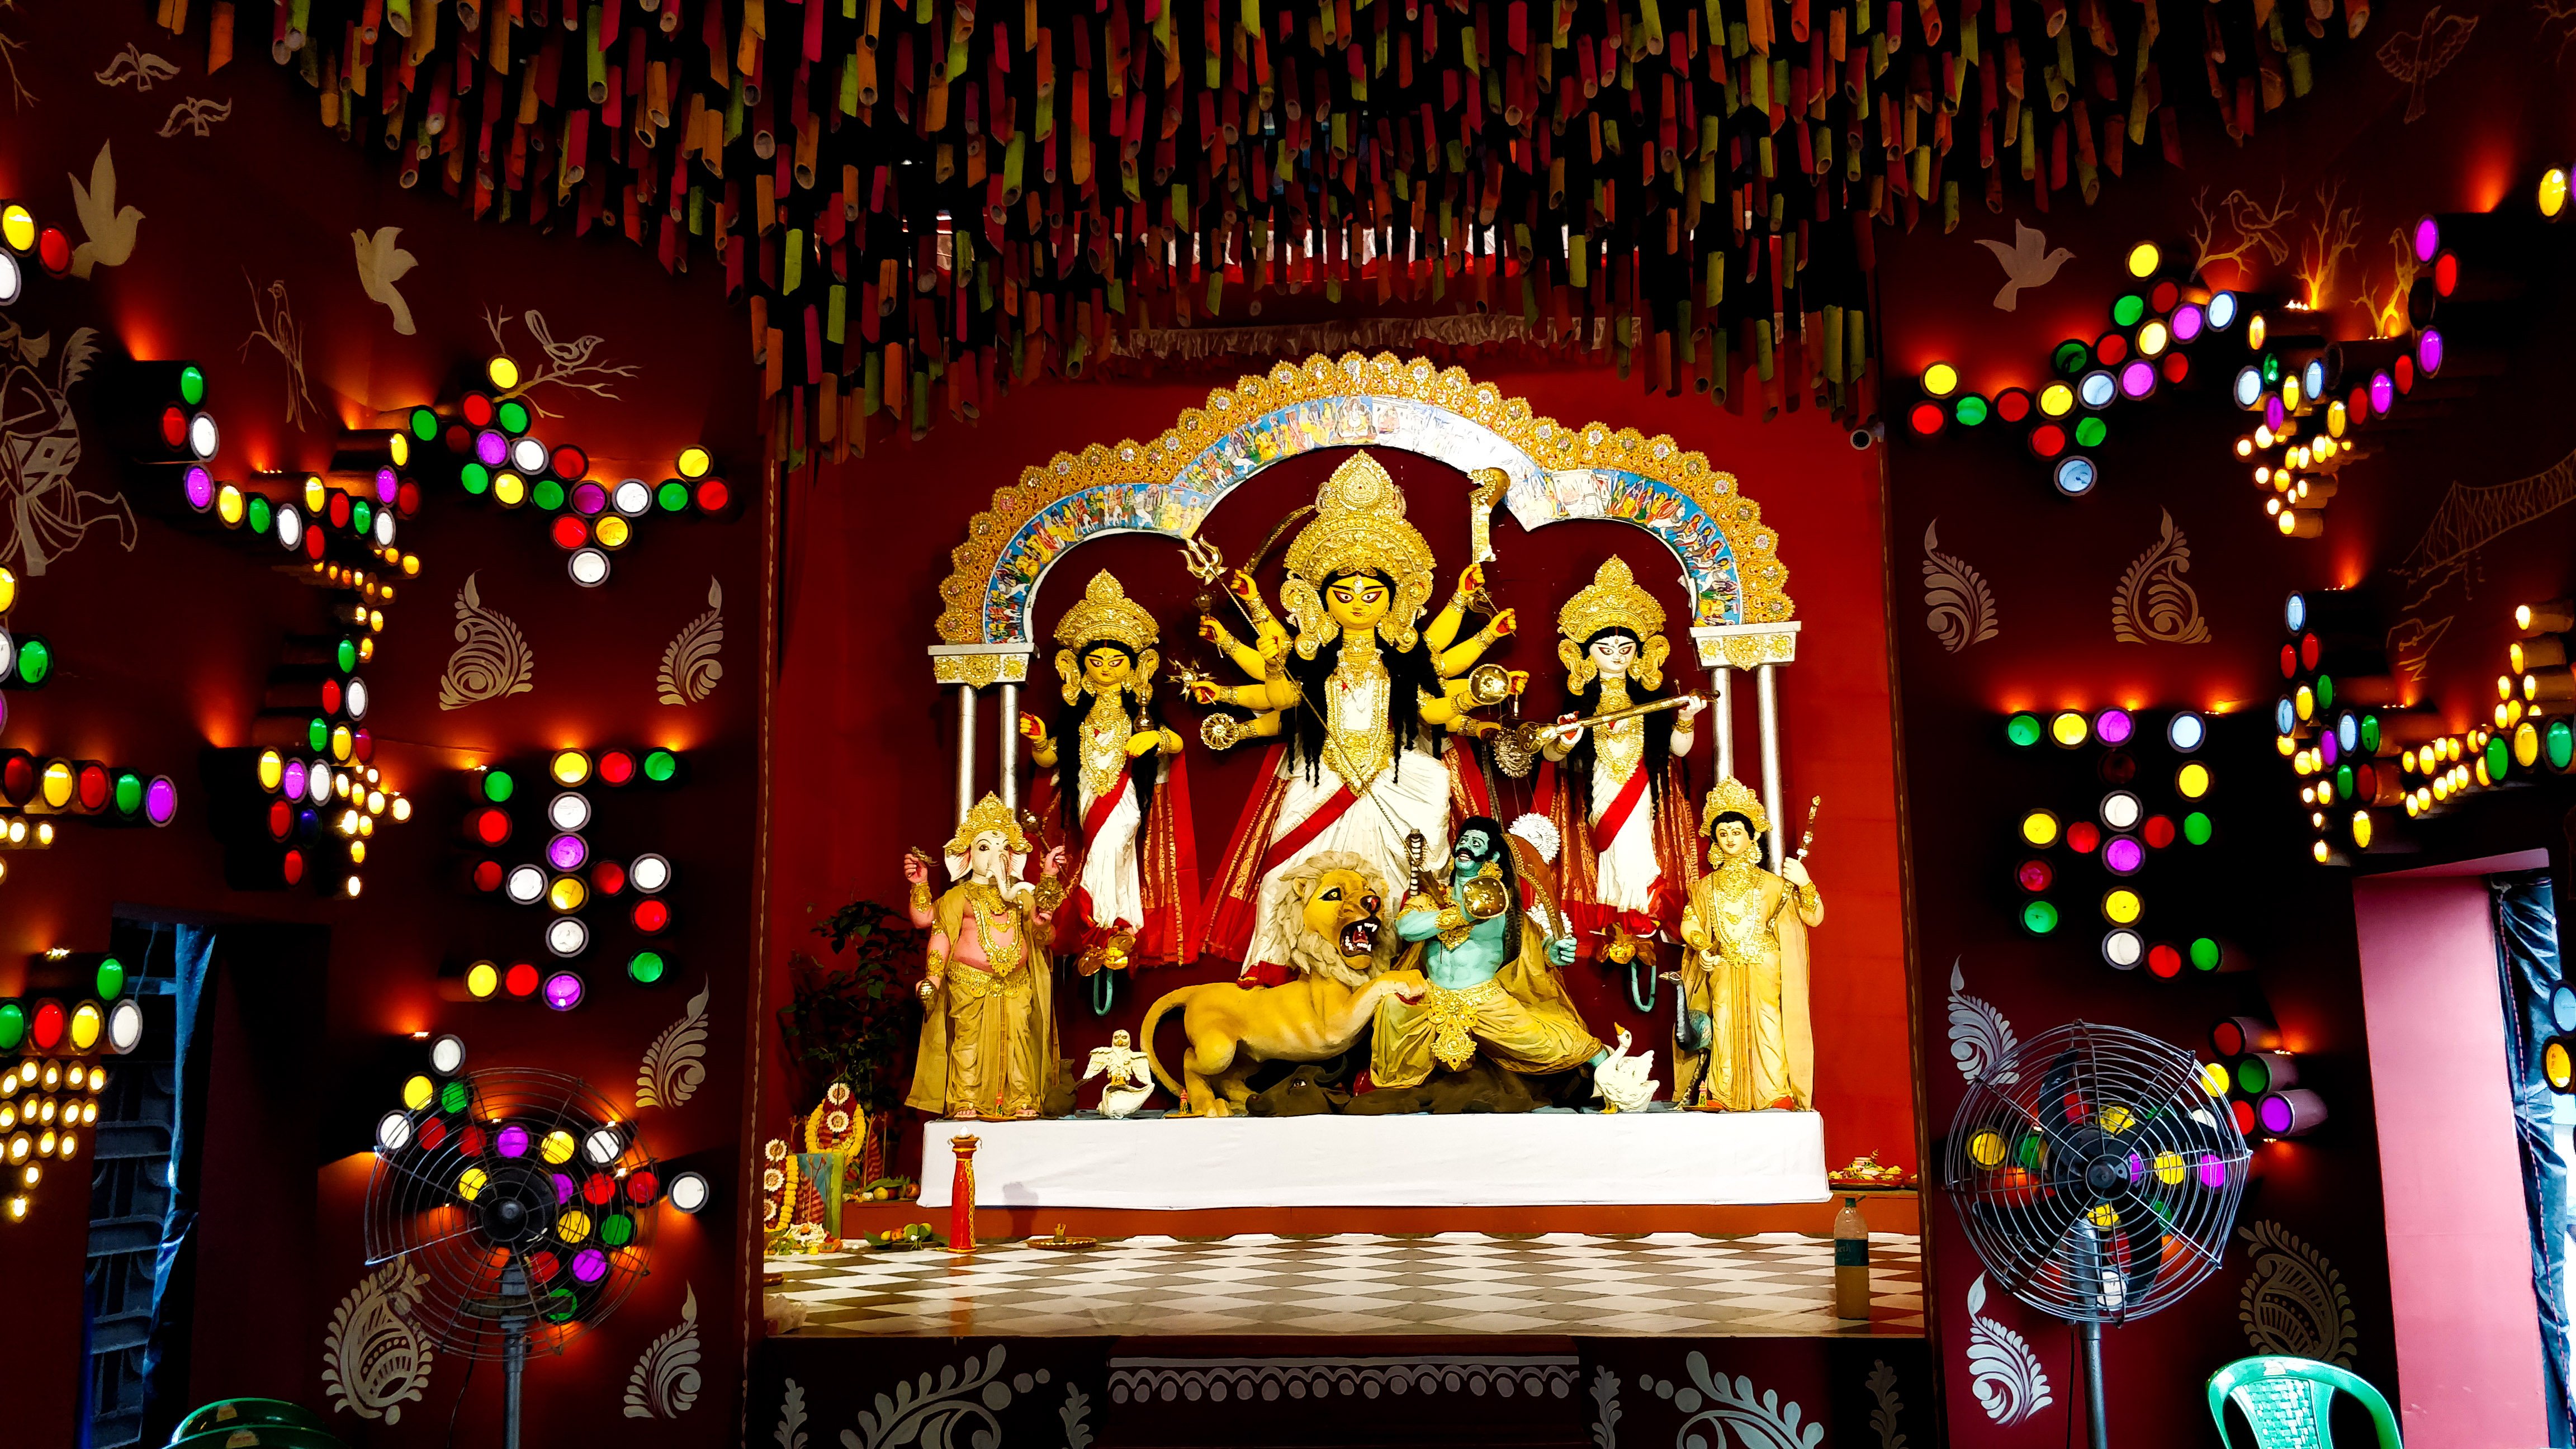 From left - Ganesh, God of success; Lakshmi, Goddess of wealth and prosperity; Durga, Warrior Goddess, Destroyer of Evil; Saraswati, Goddess of wisdom and music; Kartik, God of youth and power
At Durga's feet lies Mahishasura